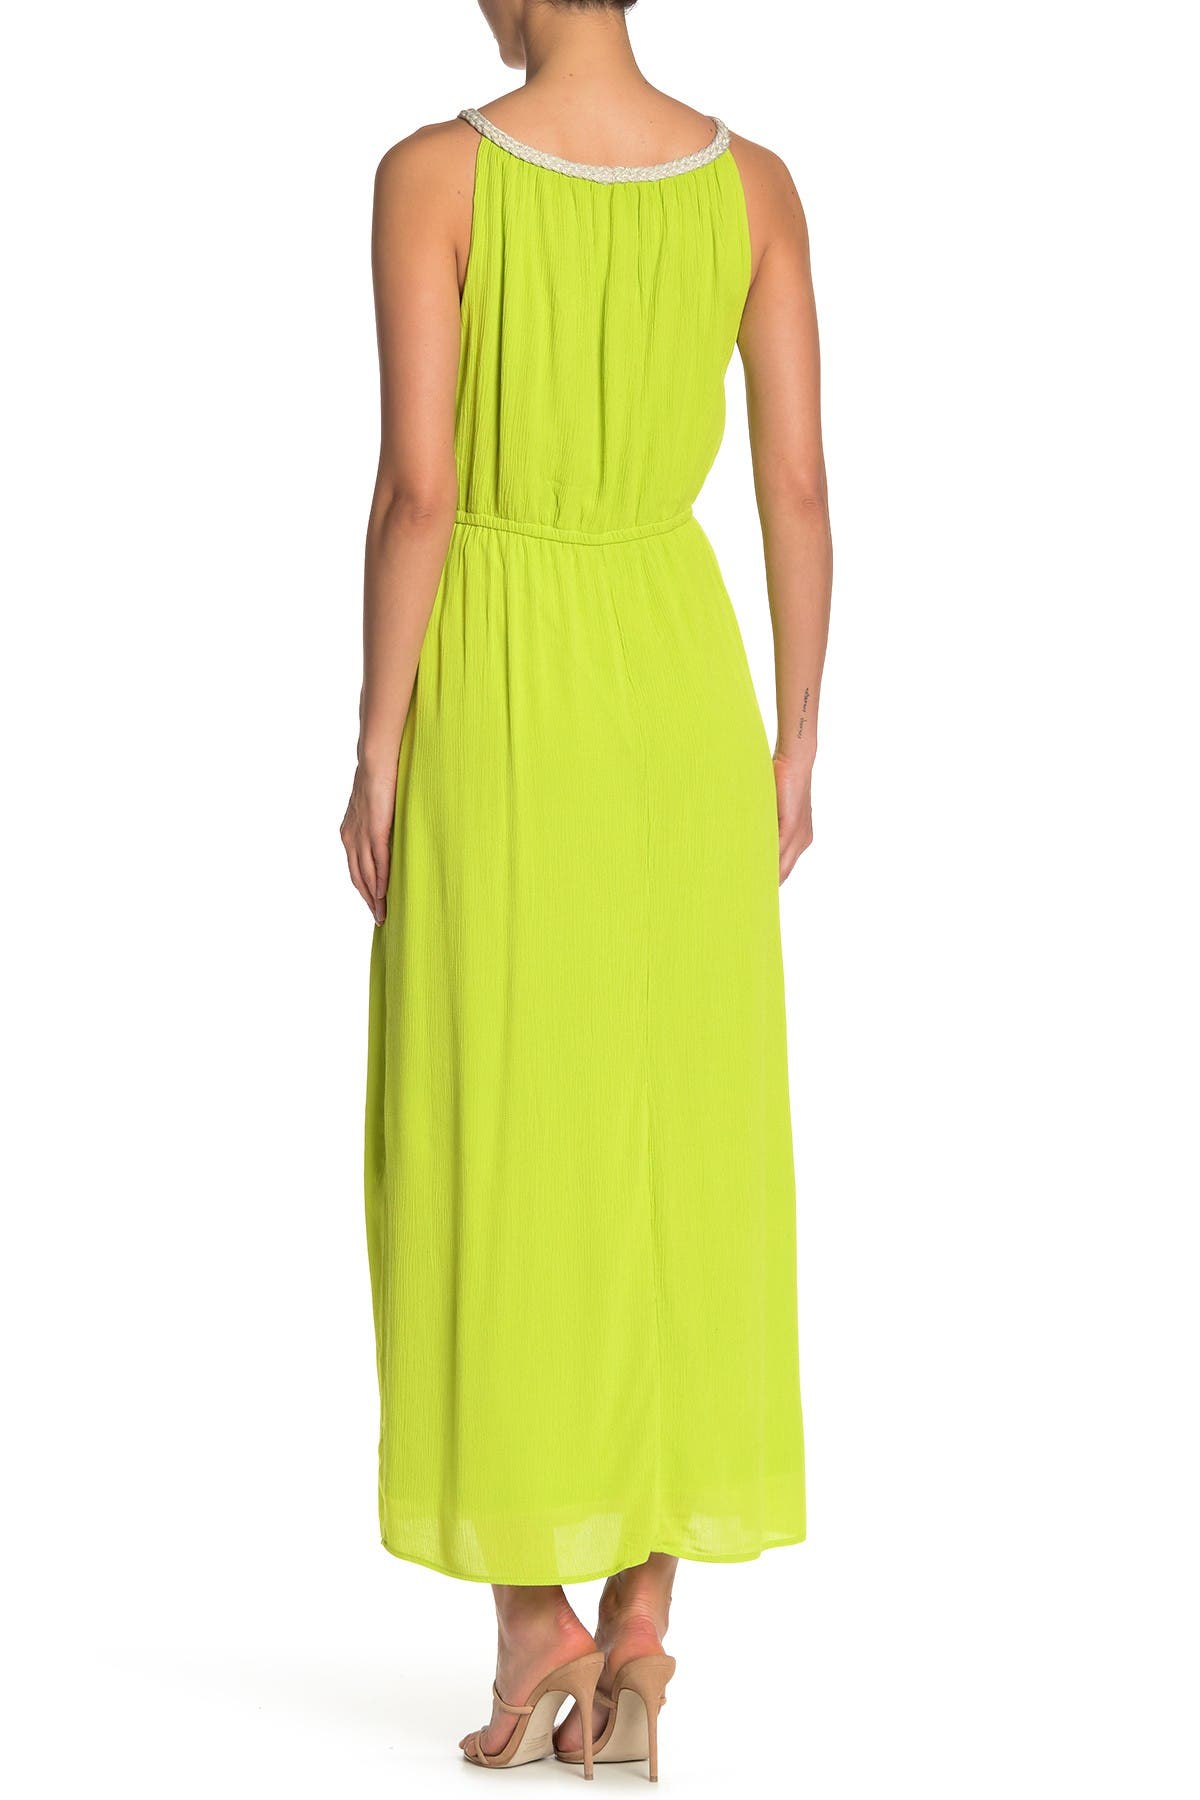 Nina Leonard Braided Neck Sleeveless Maxi Dress In Medium Green7